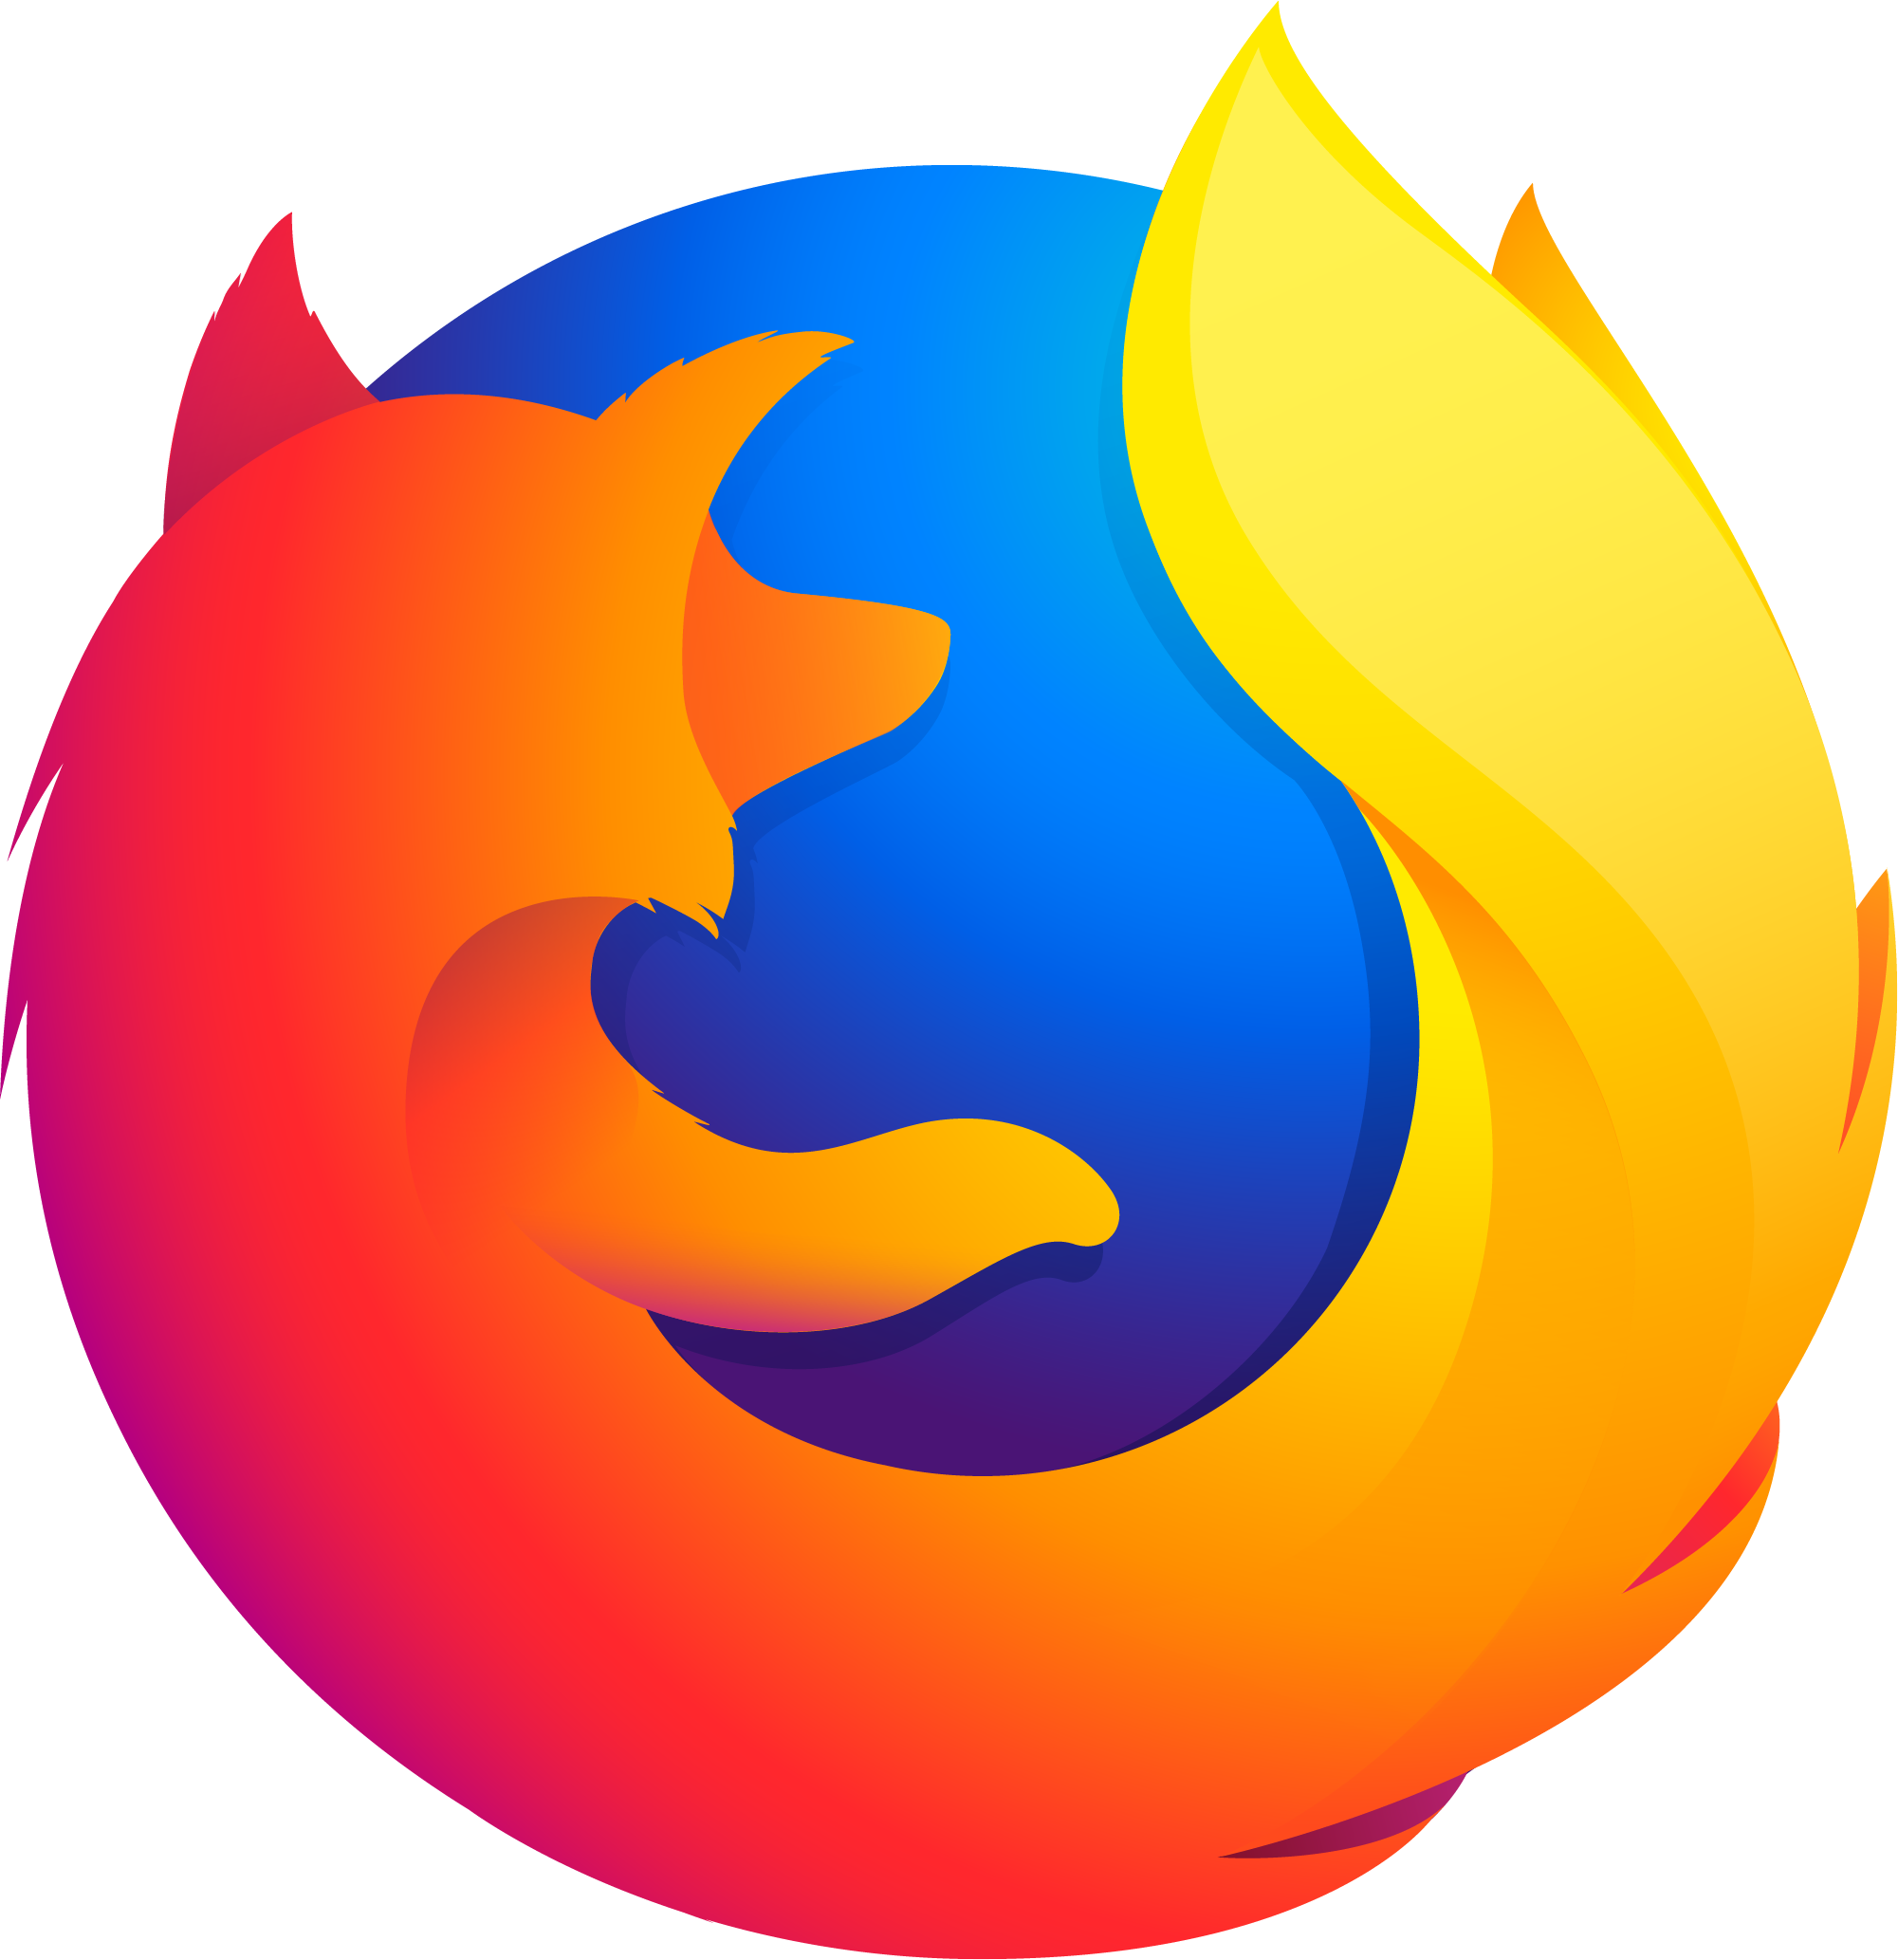 The Firefox logo: a flaming fox surrounding the Earth.